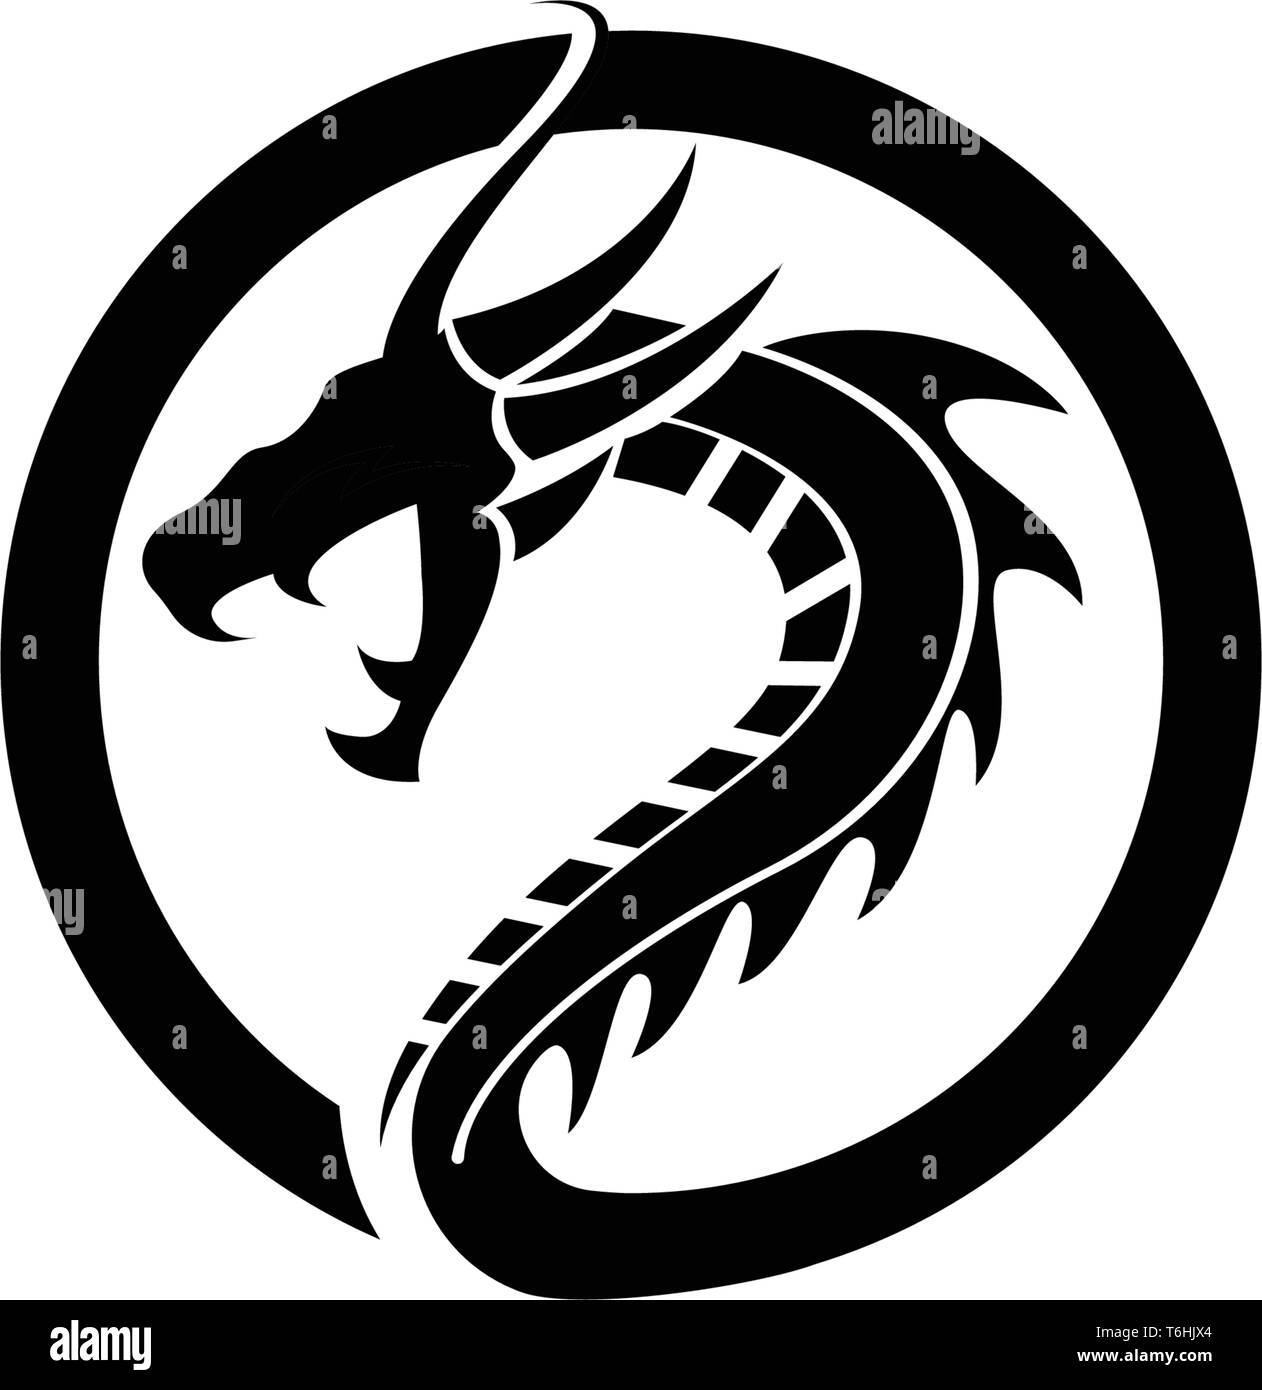 Logo dragon template vector illustration Illustration de Vecteur